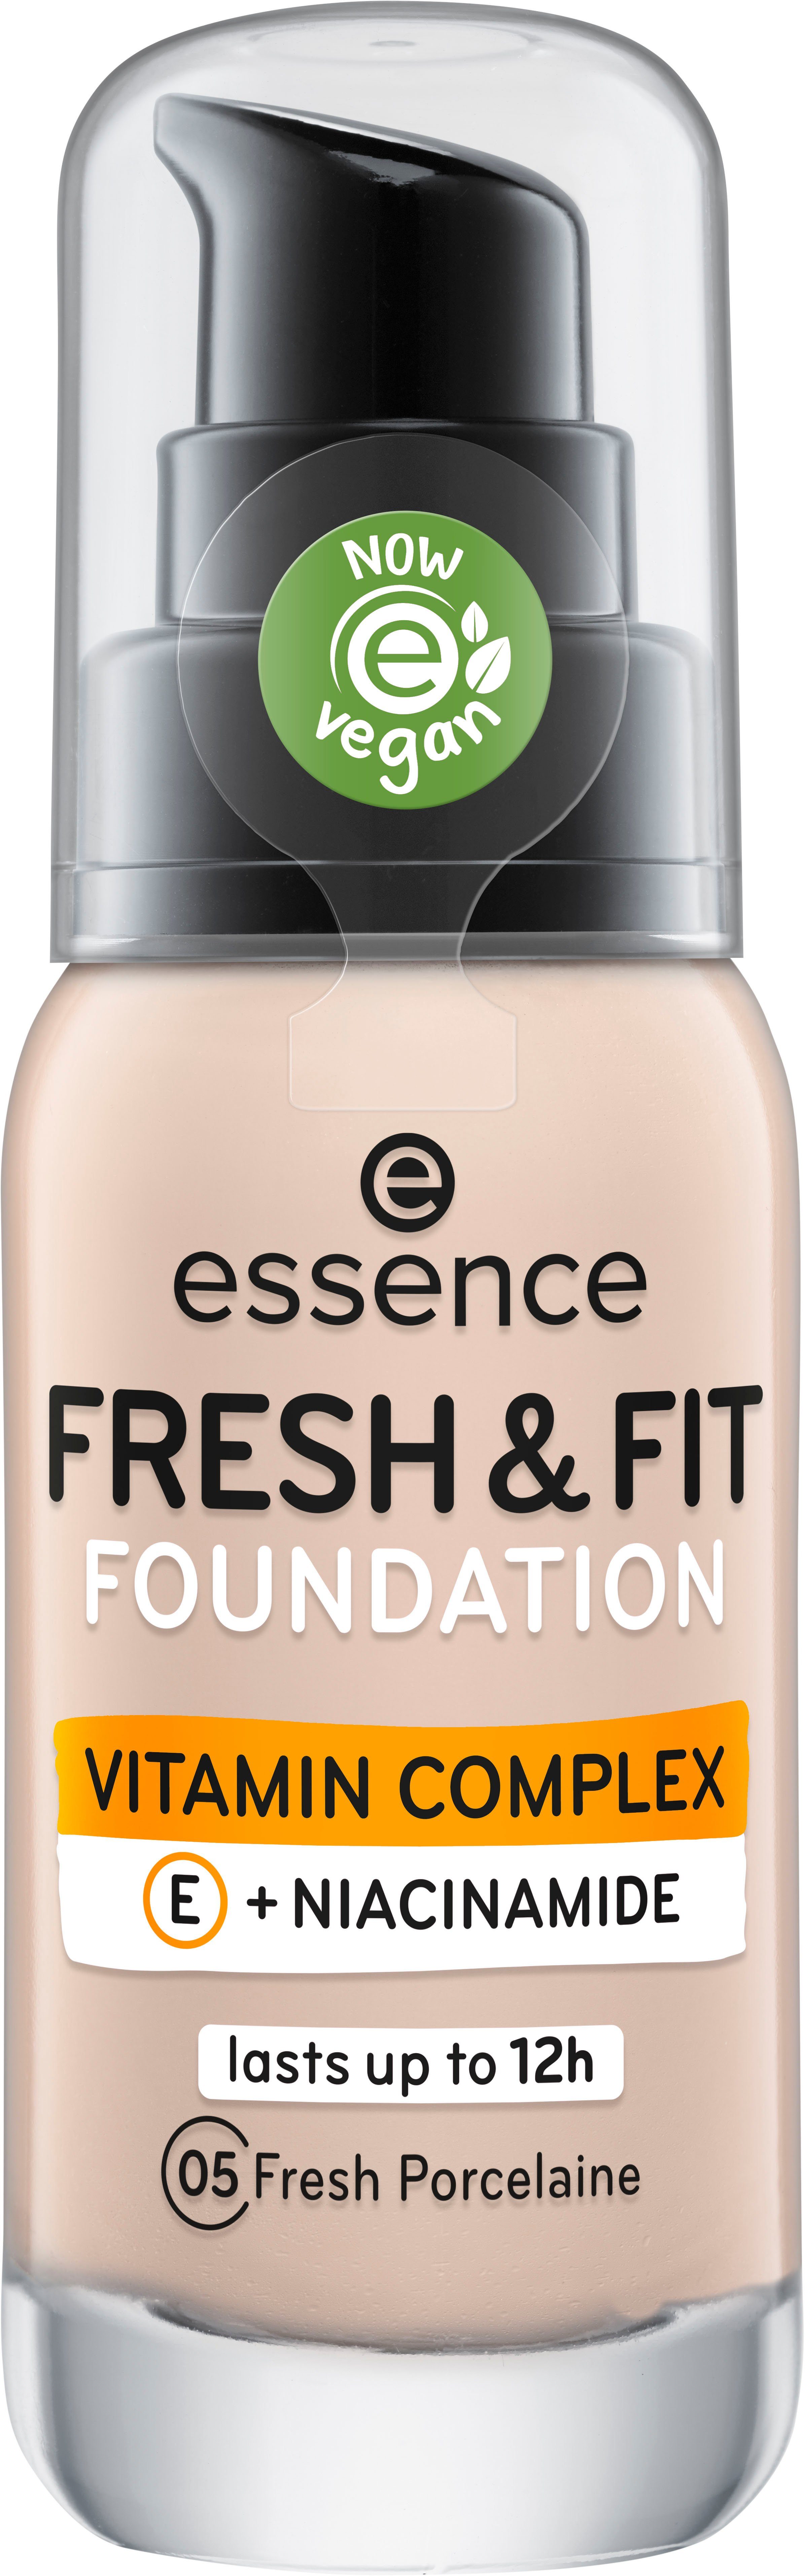 Essence fresh porcelaine FIT FOUNDATION, & 3-tlg. Foundation FRESH